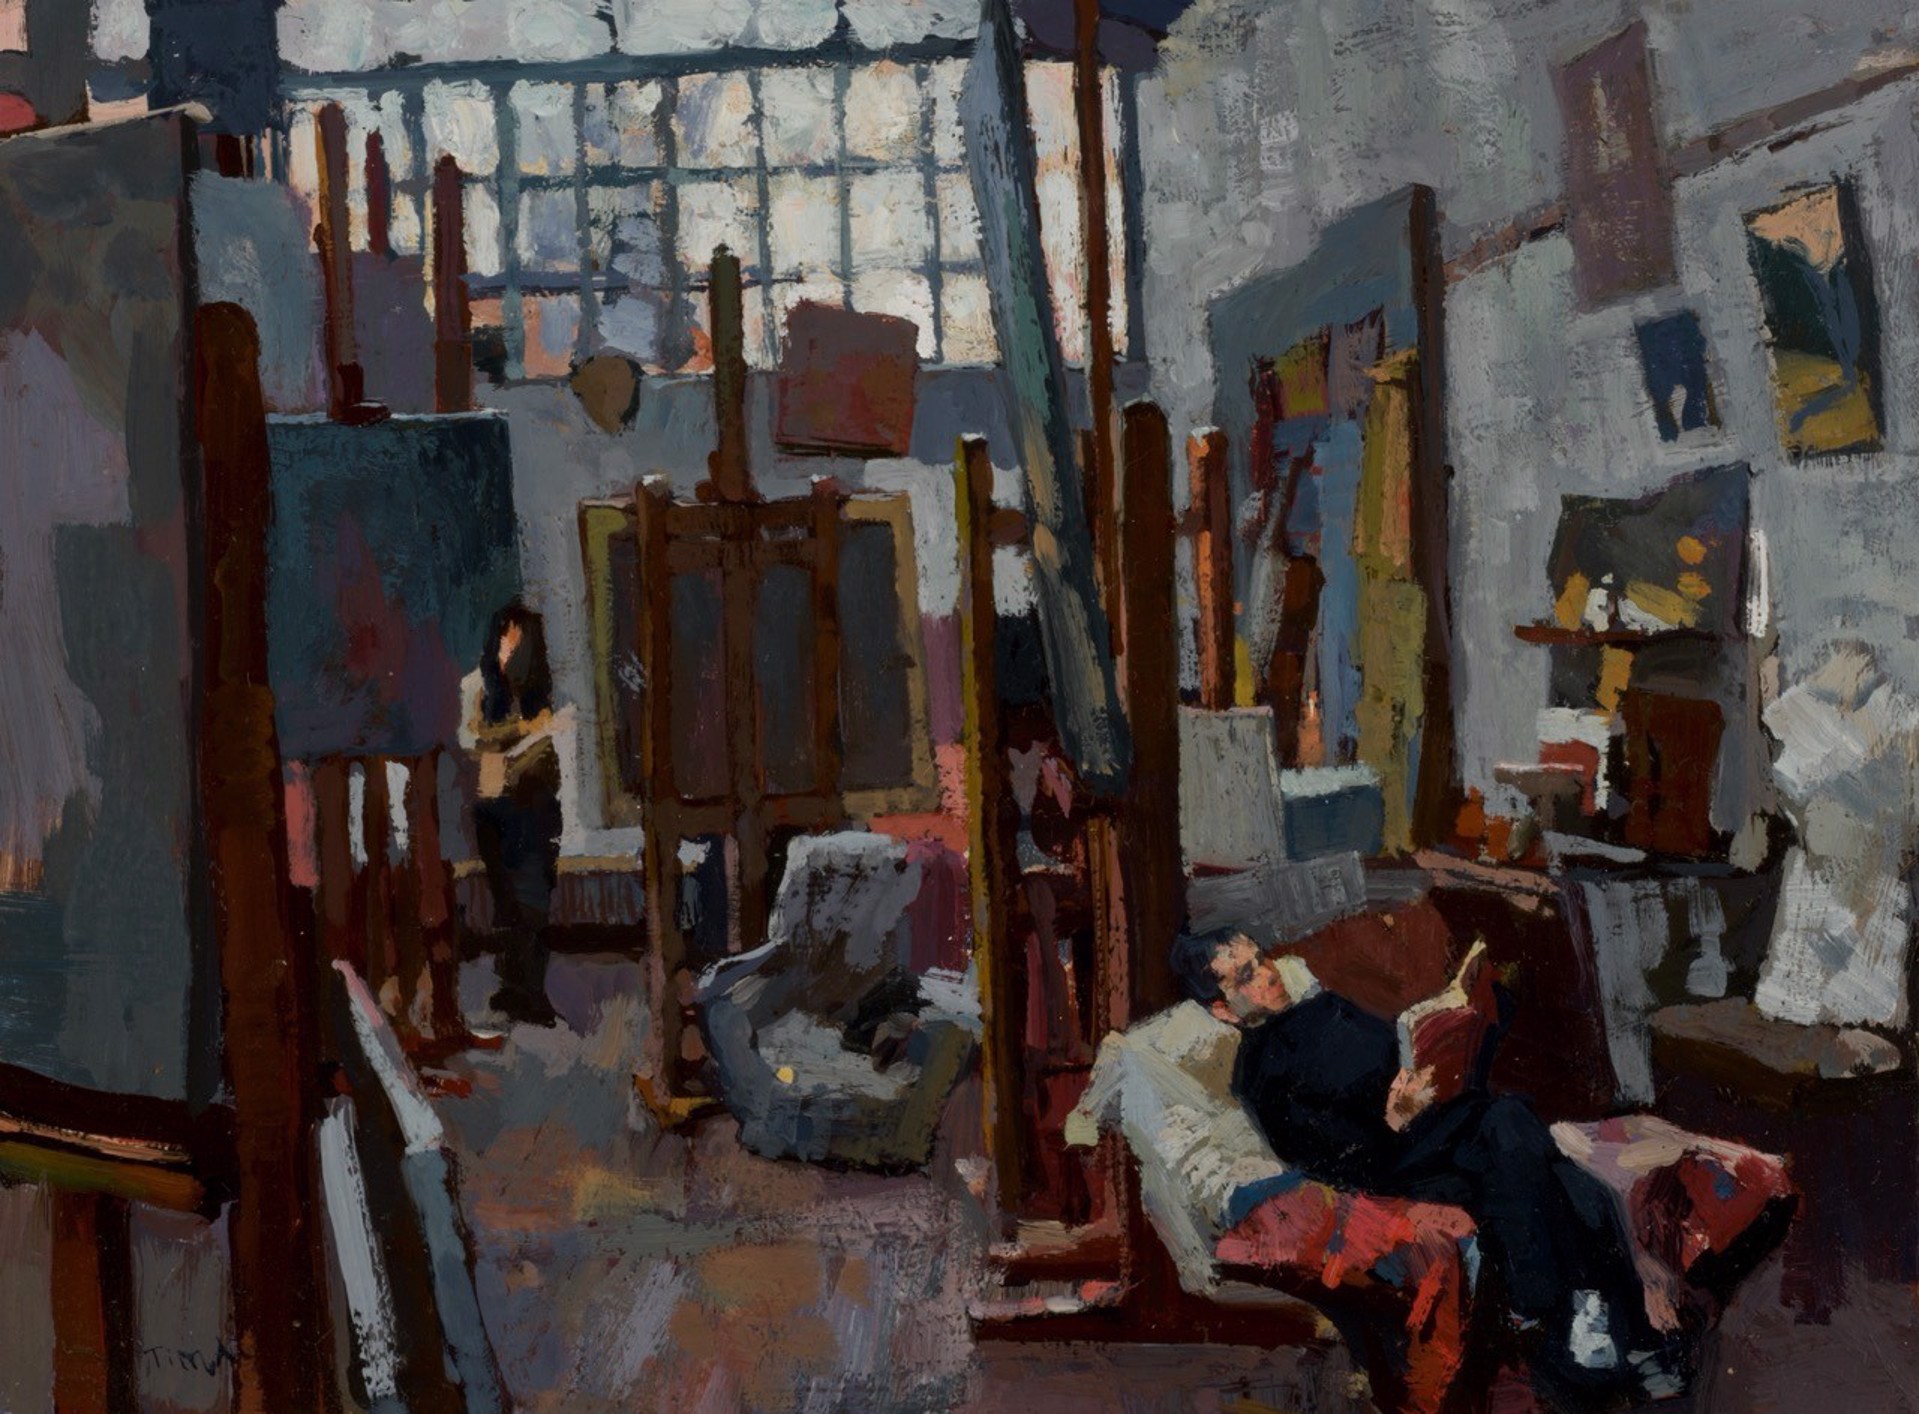 Break at the Studio by Timur Akhriev